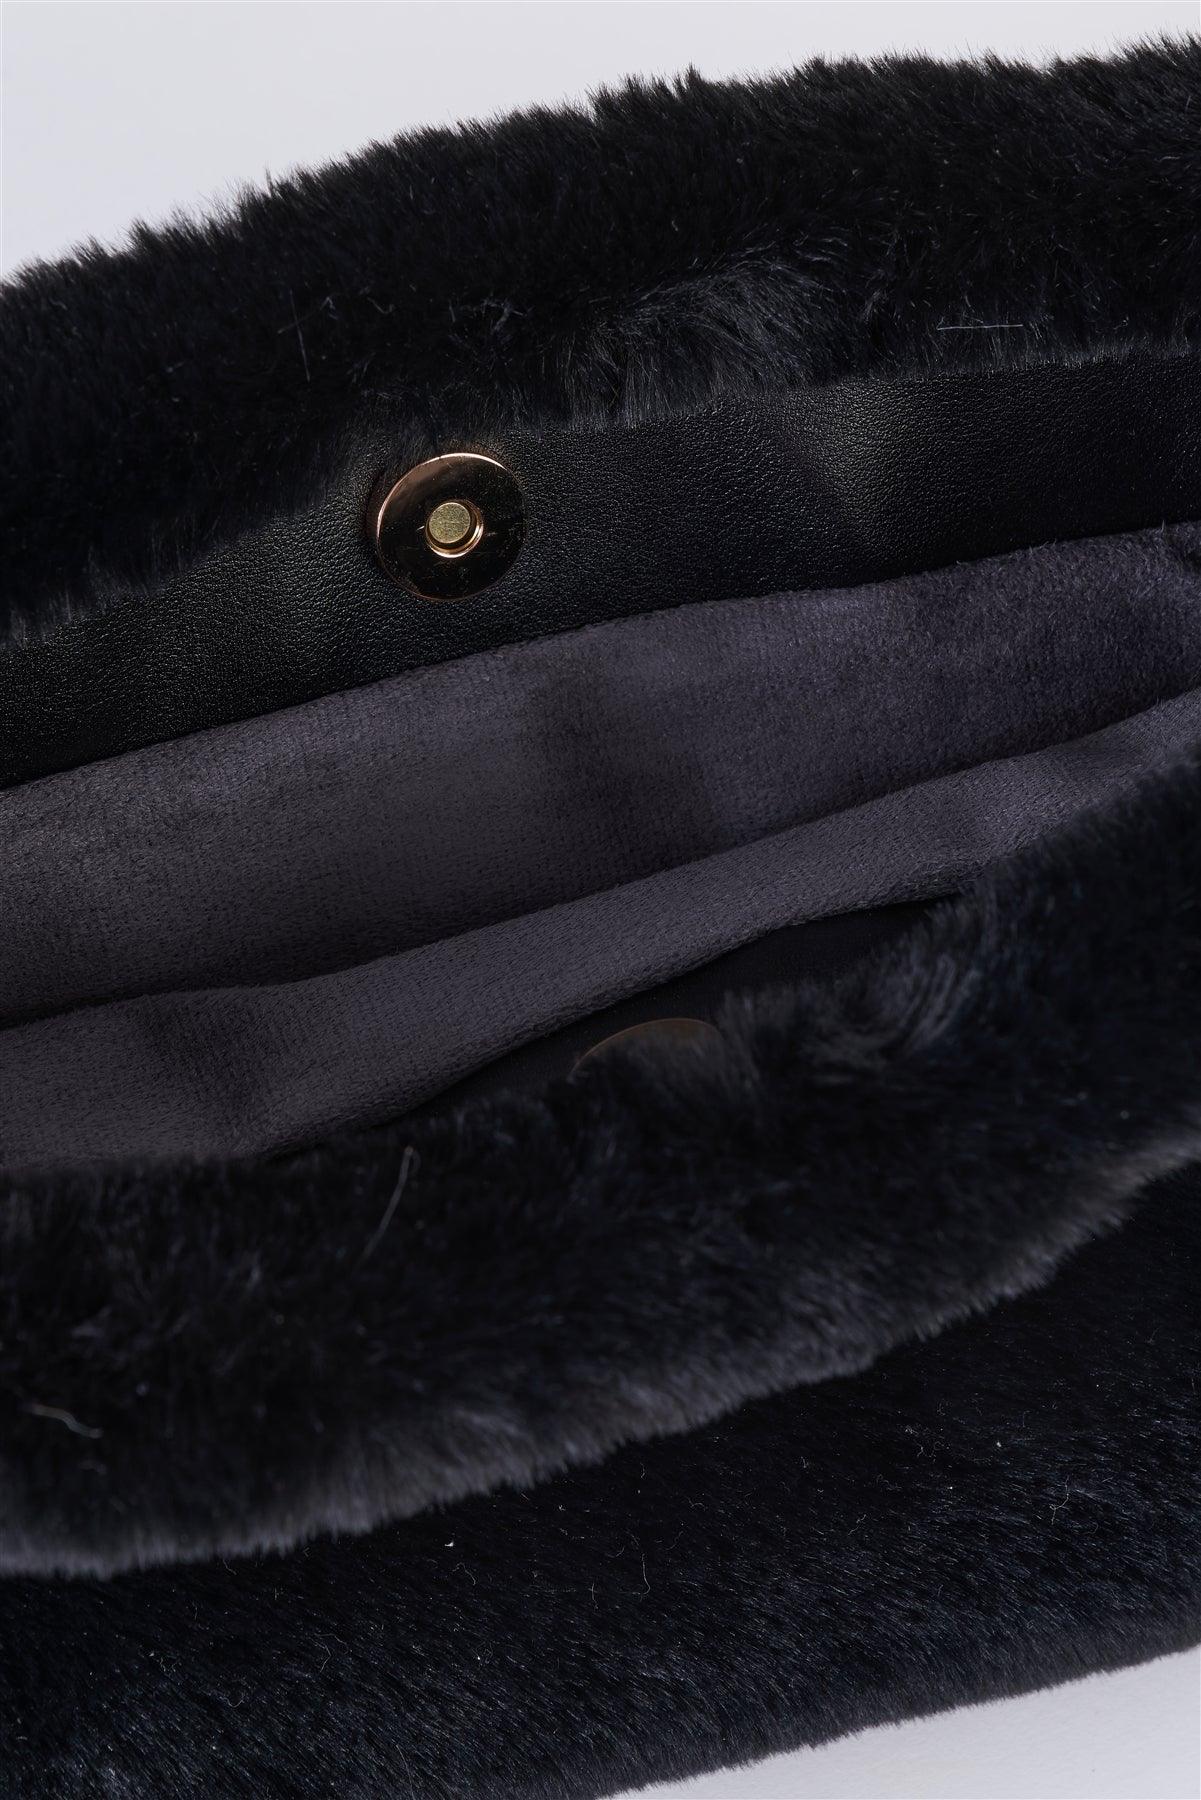 Black Faux Fur Hidden Magnetic Snap Button Closure Crossbody Bag / Clutch With Hidden Hand Strap Loop / 1 Bag